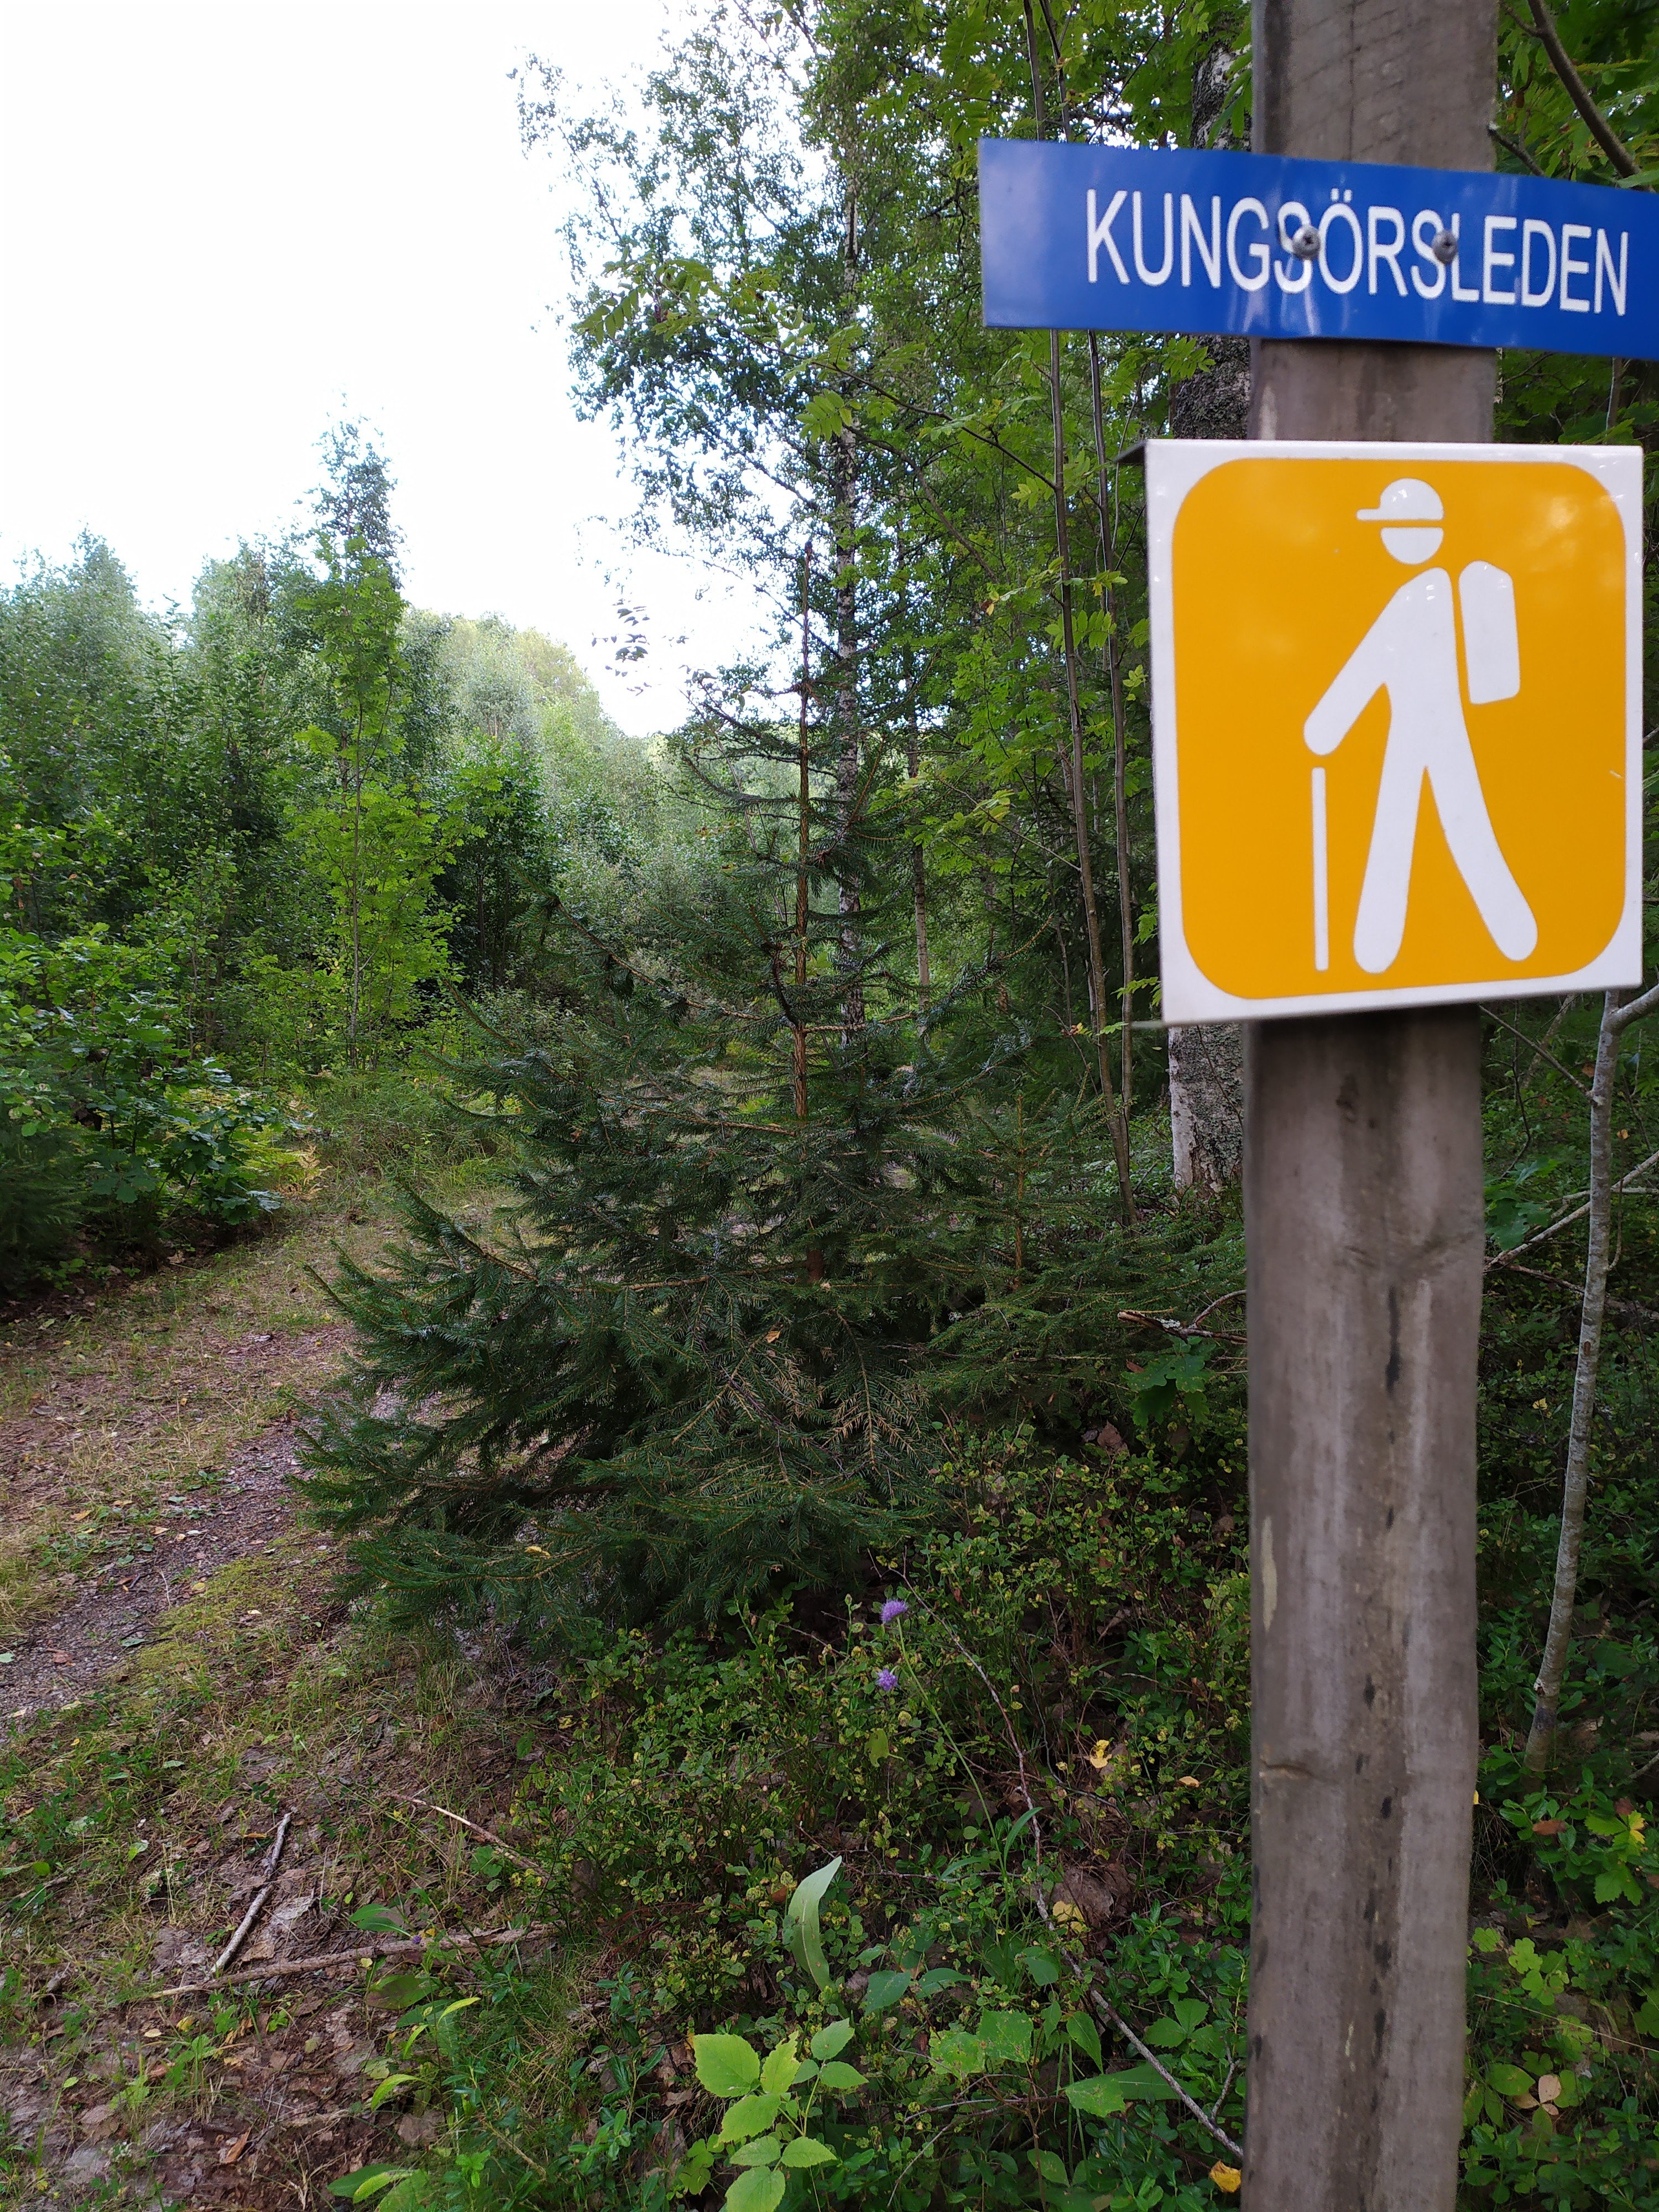 The Kungsörsleden hiking trail